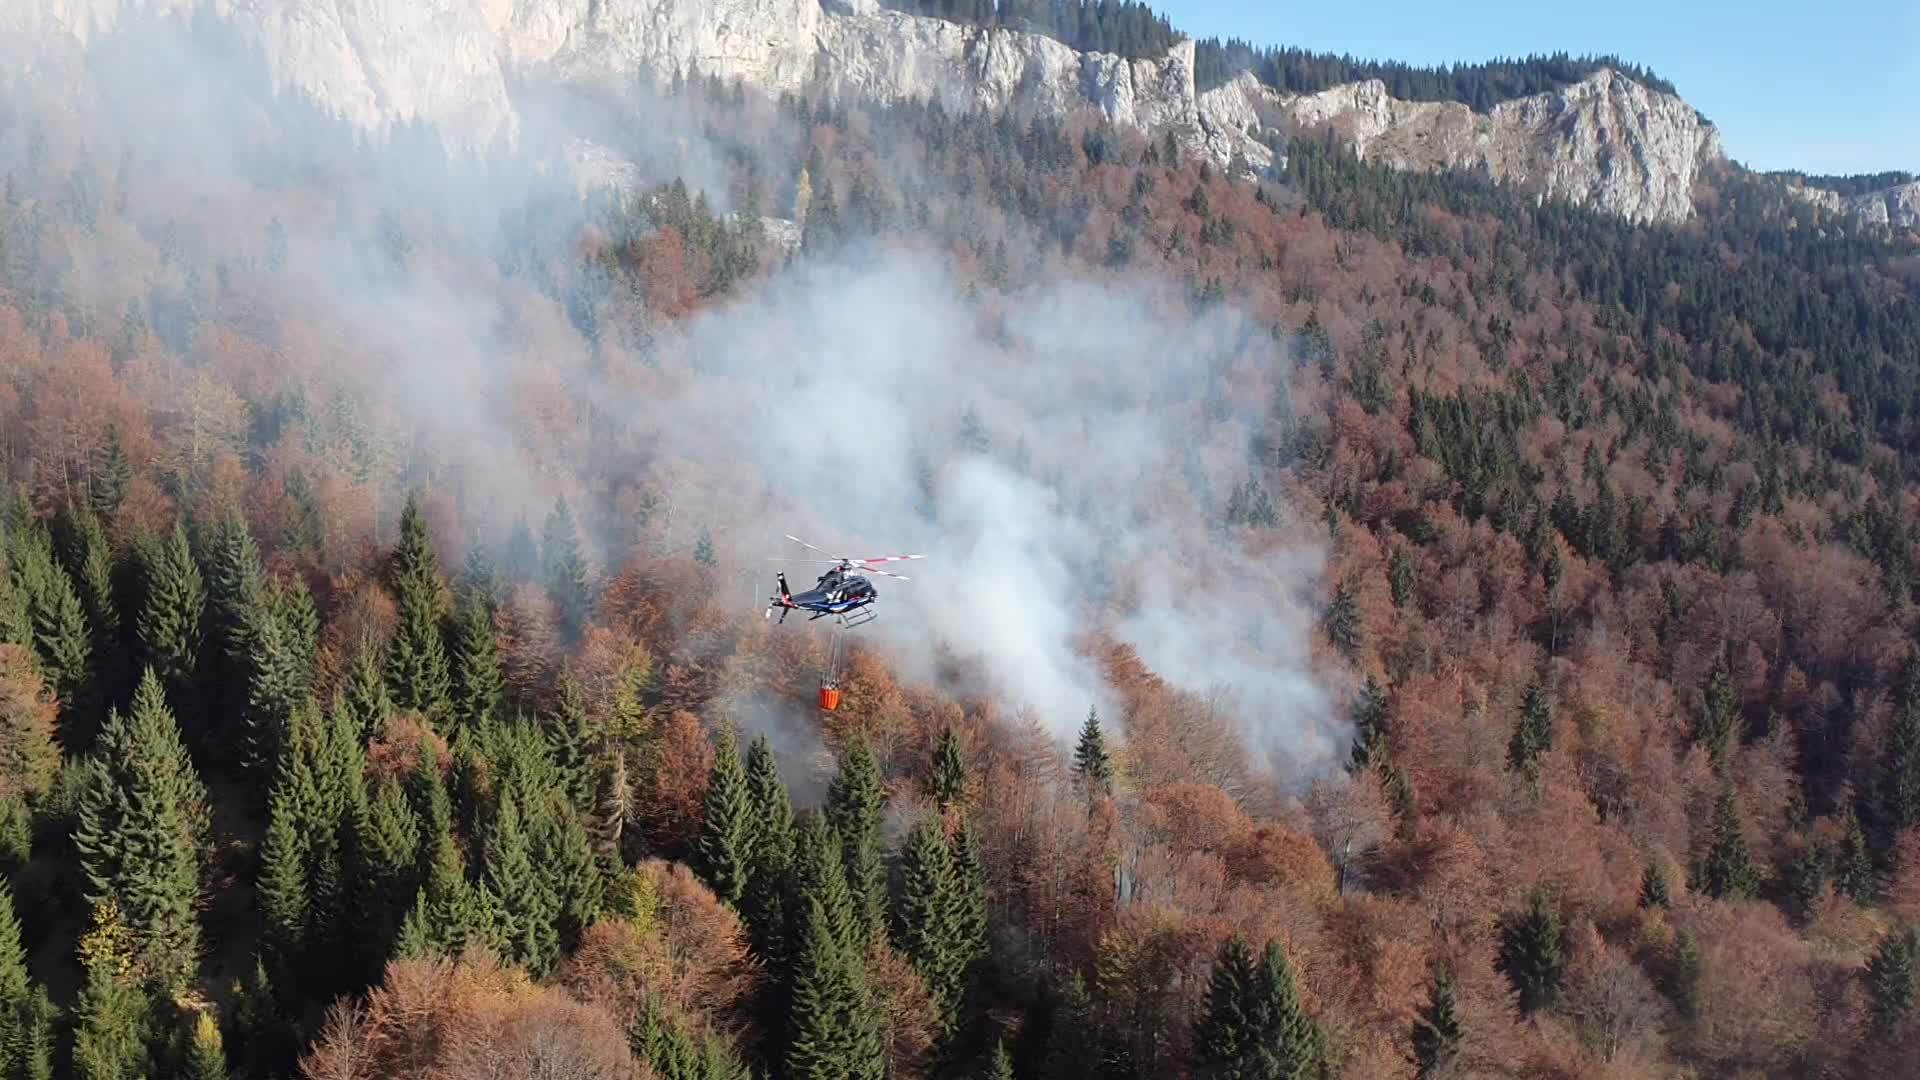  Spasavanje endemske vrste: Helikopteri gase požar kod Višegrada, stigla pomoć i iz Srbije (VIDEO) 